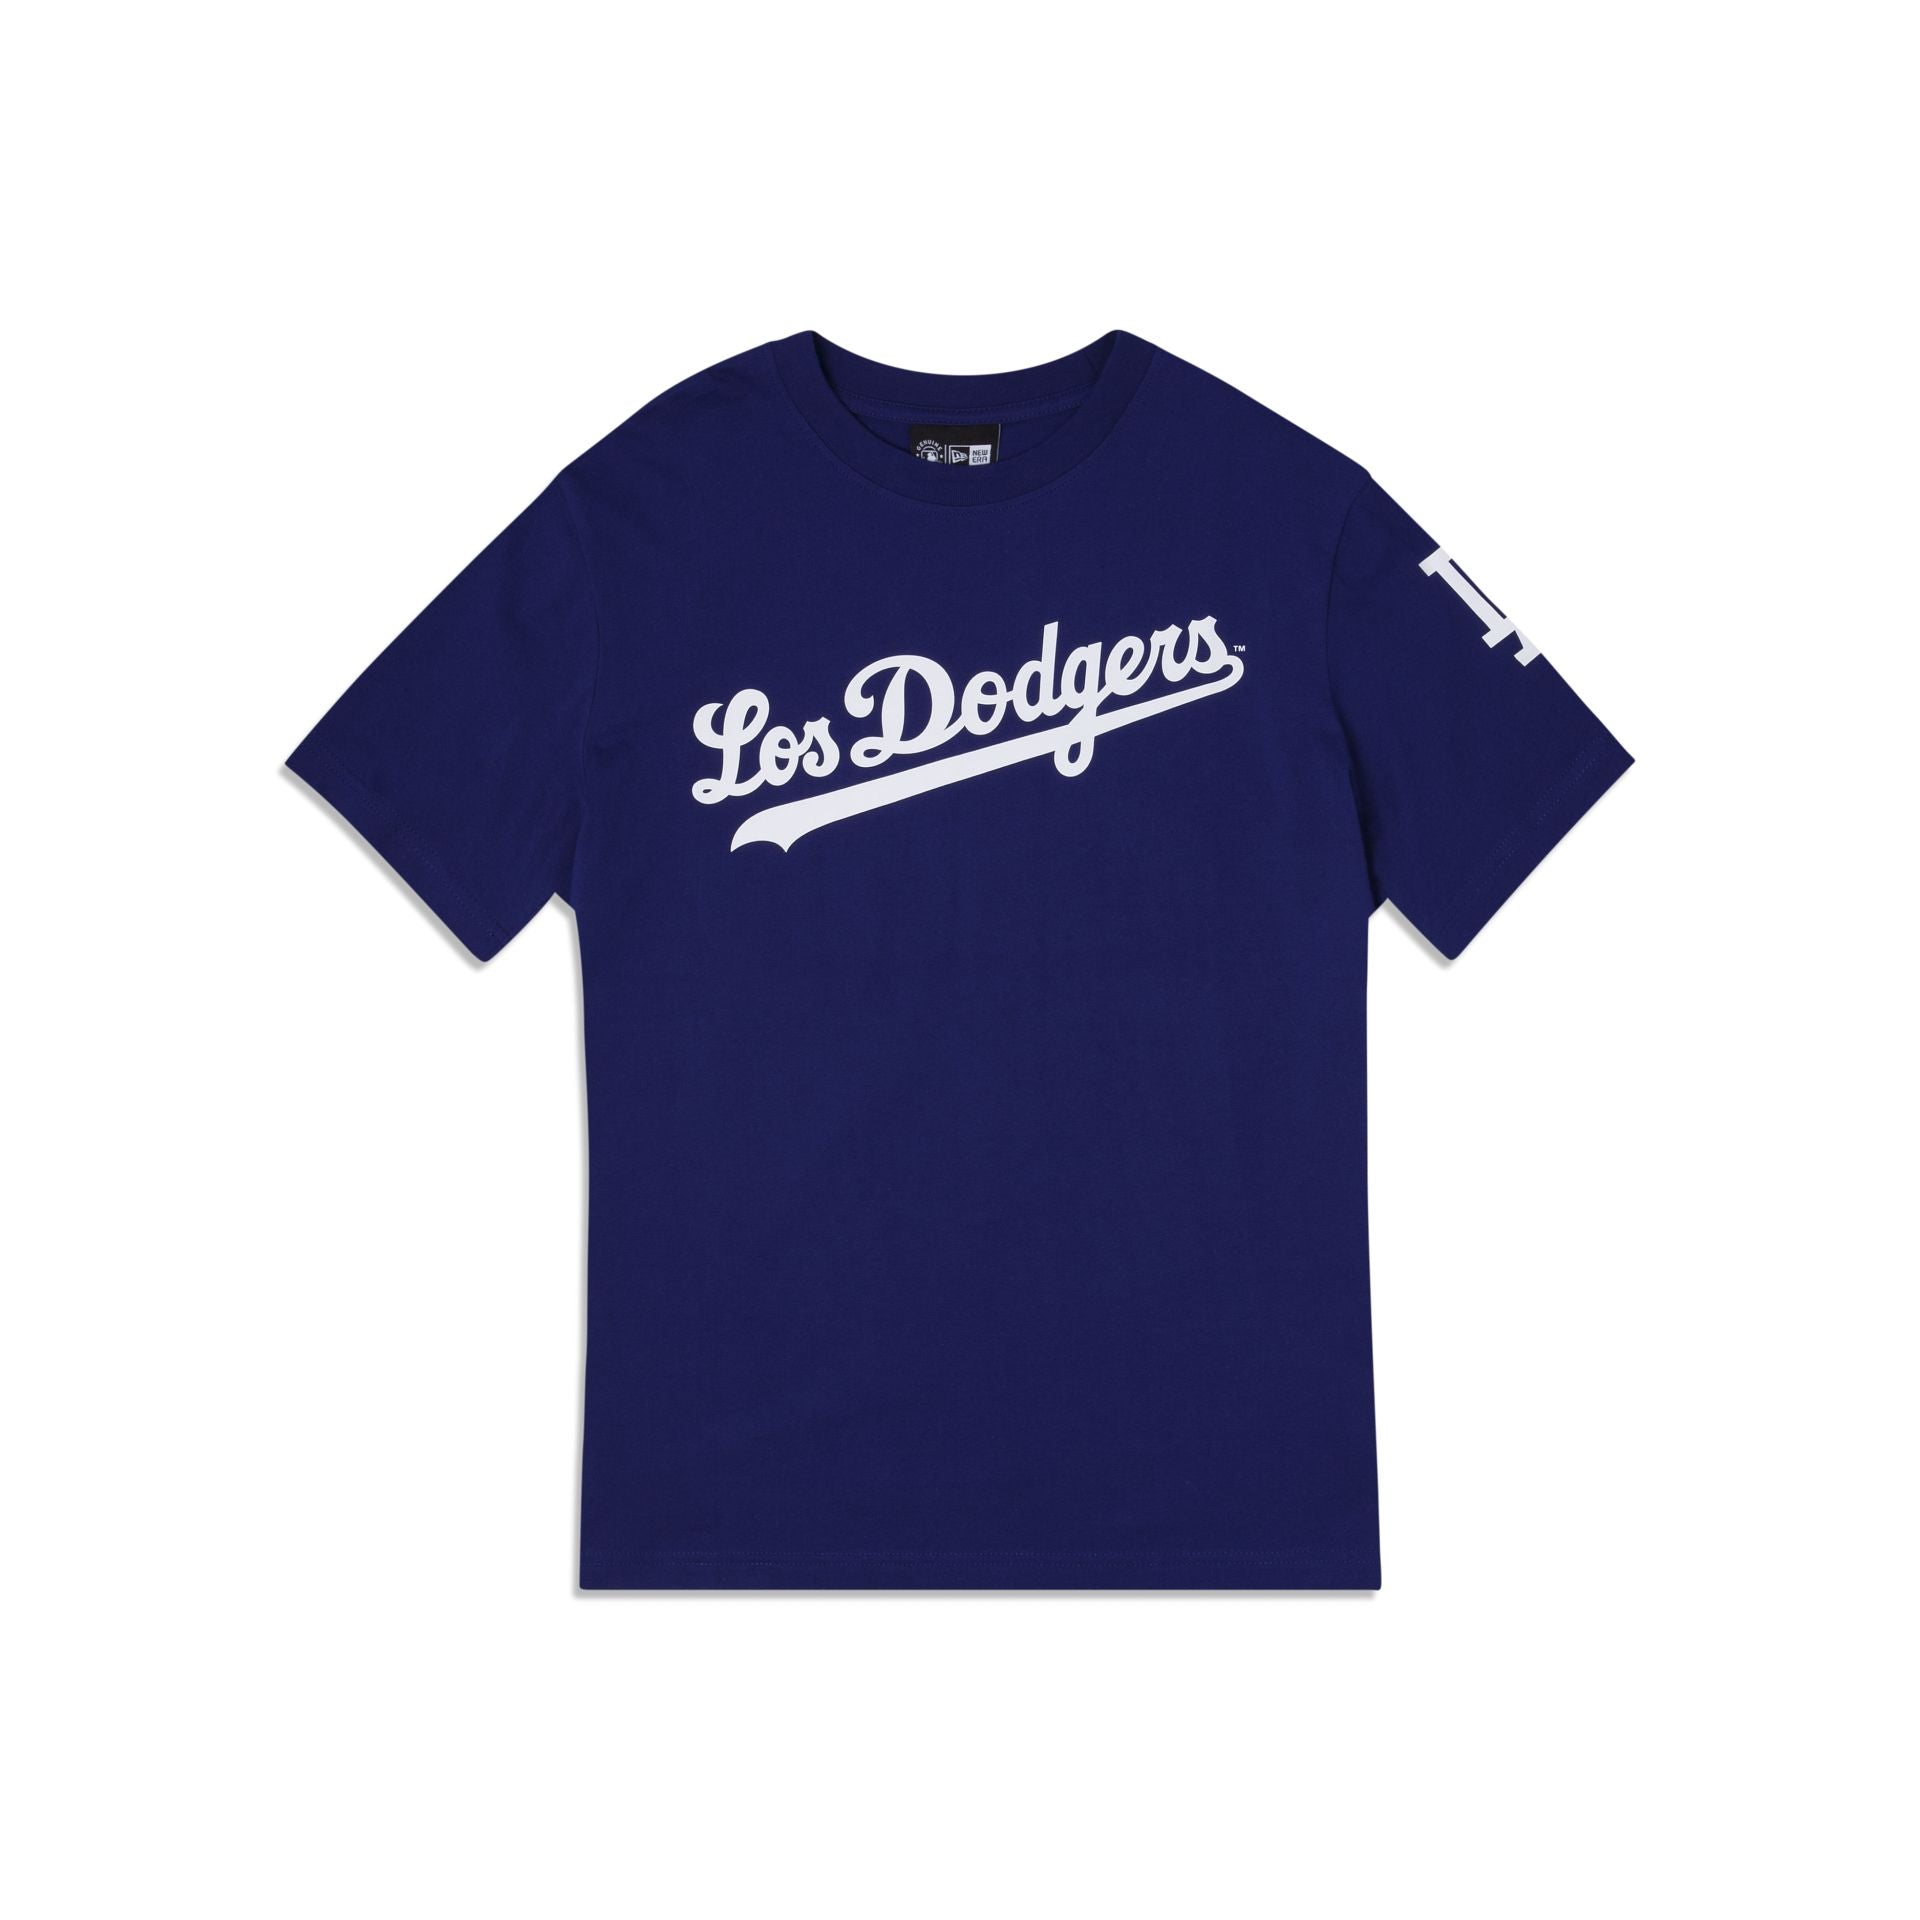 Top Vintage Dodgers Name Throwback Retro Apparel Gift Men